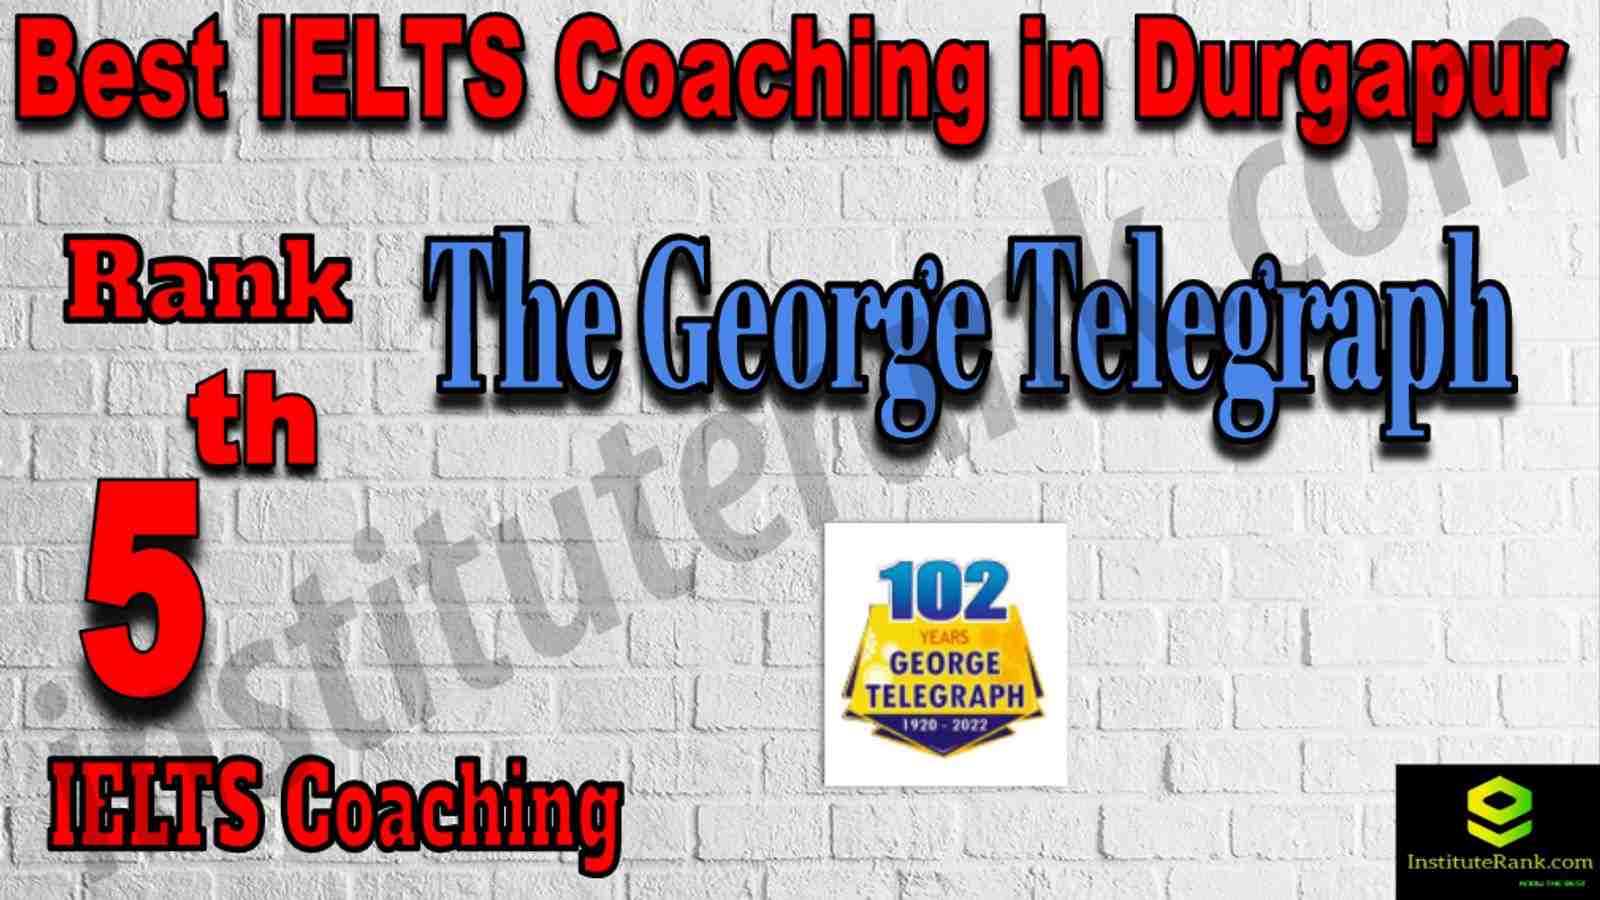 5th Best IELTS Coaching in Durgapur